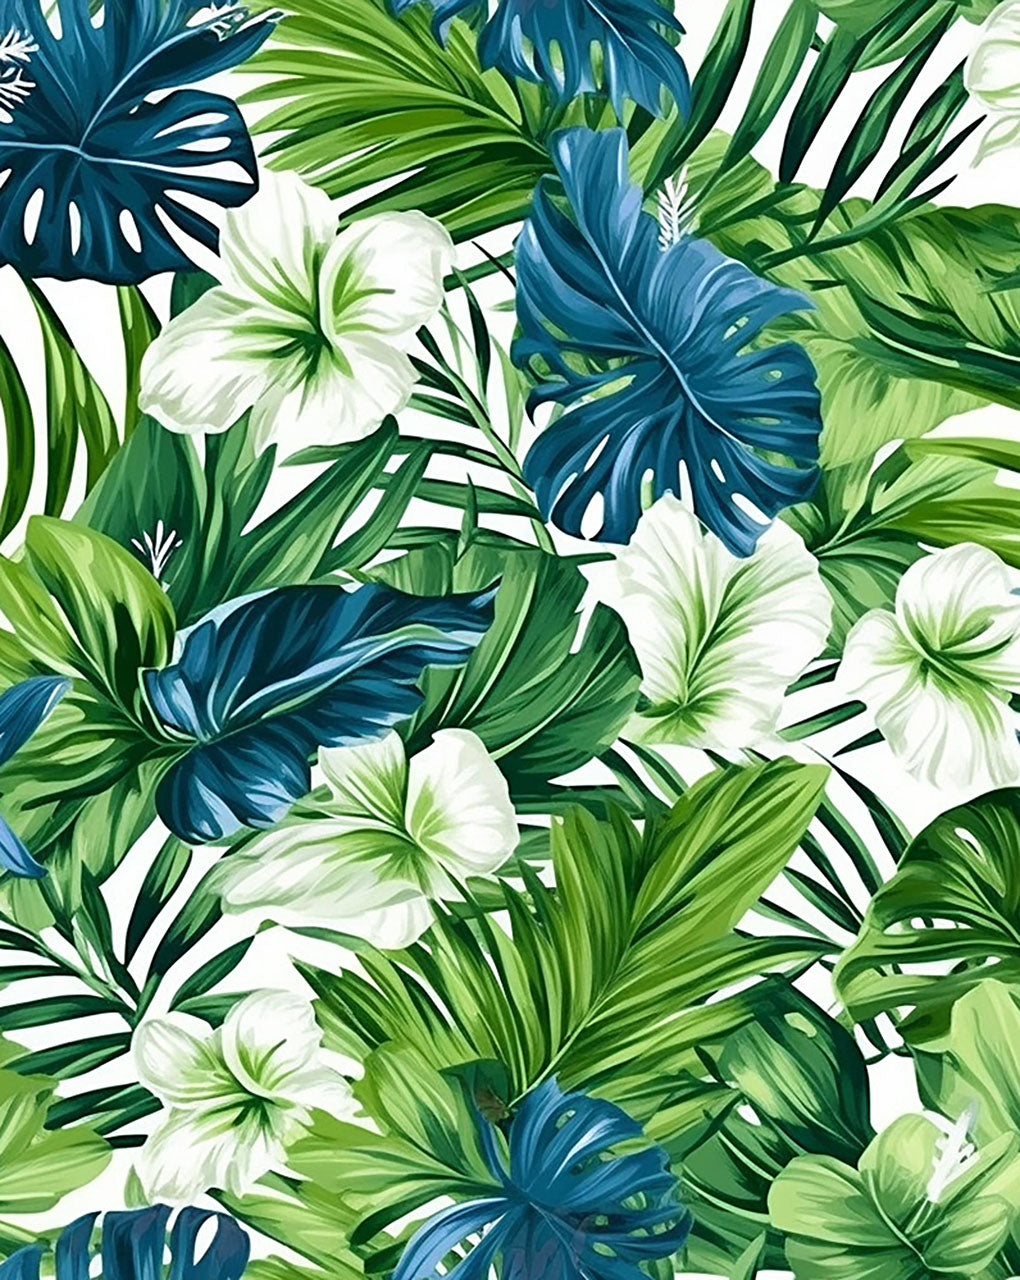 Floral Digital Print